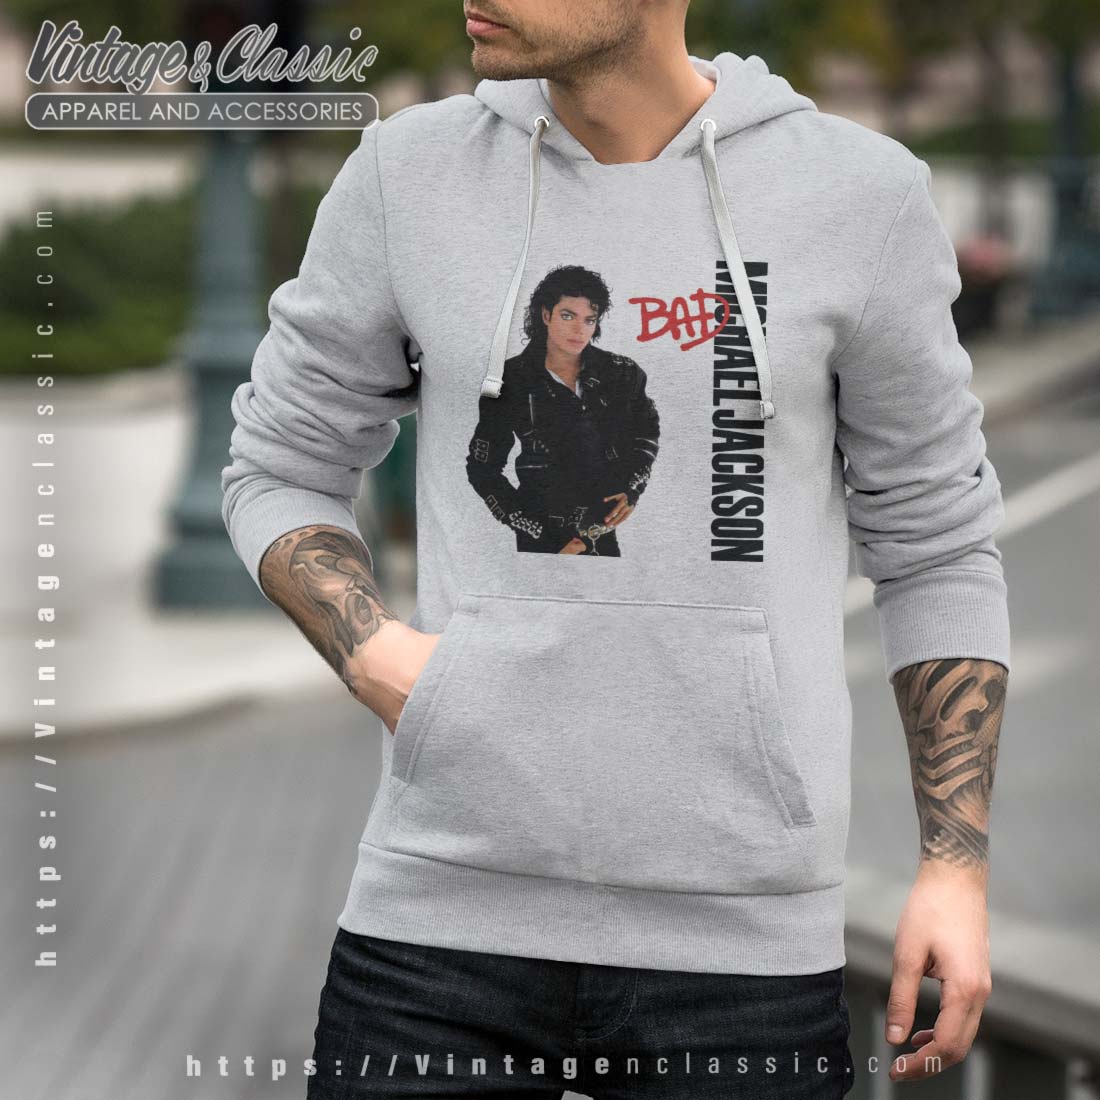 1988 Vintage Michael Jackson Moonwalker Tee Shirt Extremely 